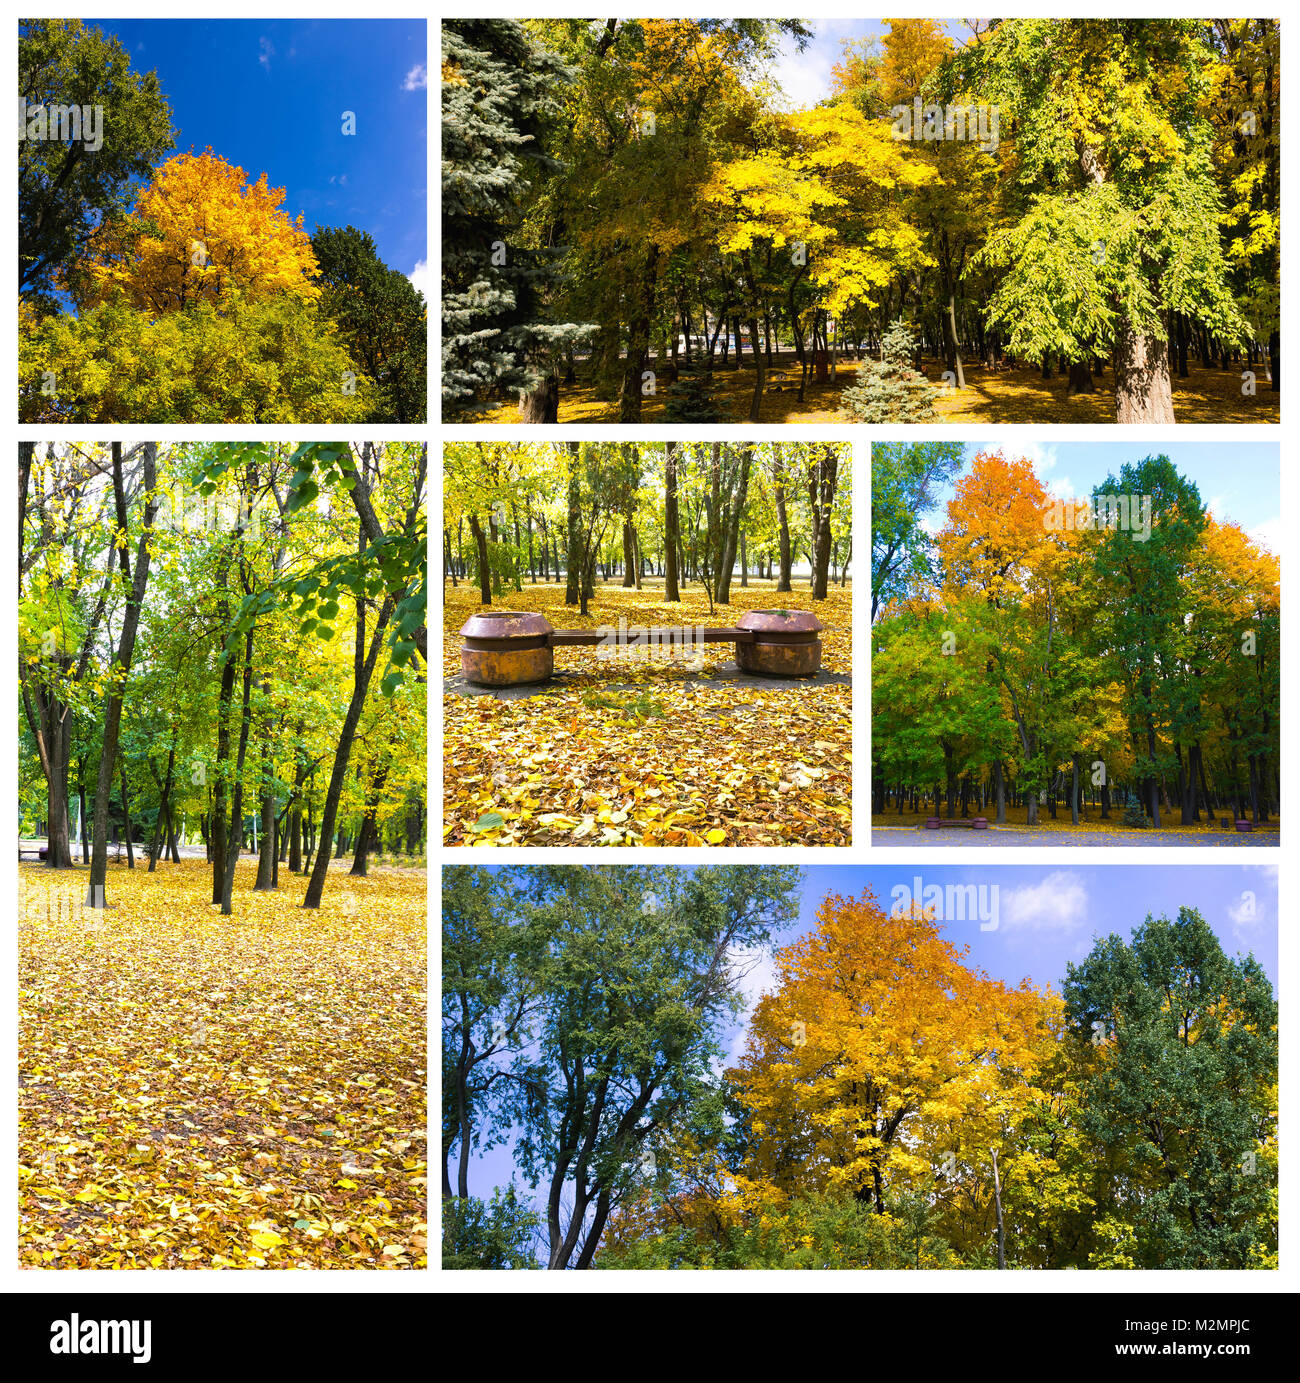 Autumn collage - Collection of autumn photos Stock Photo